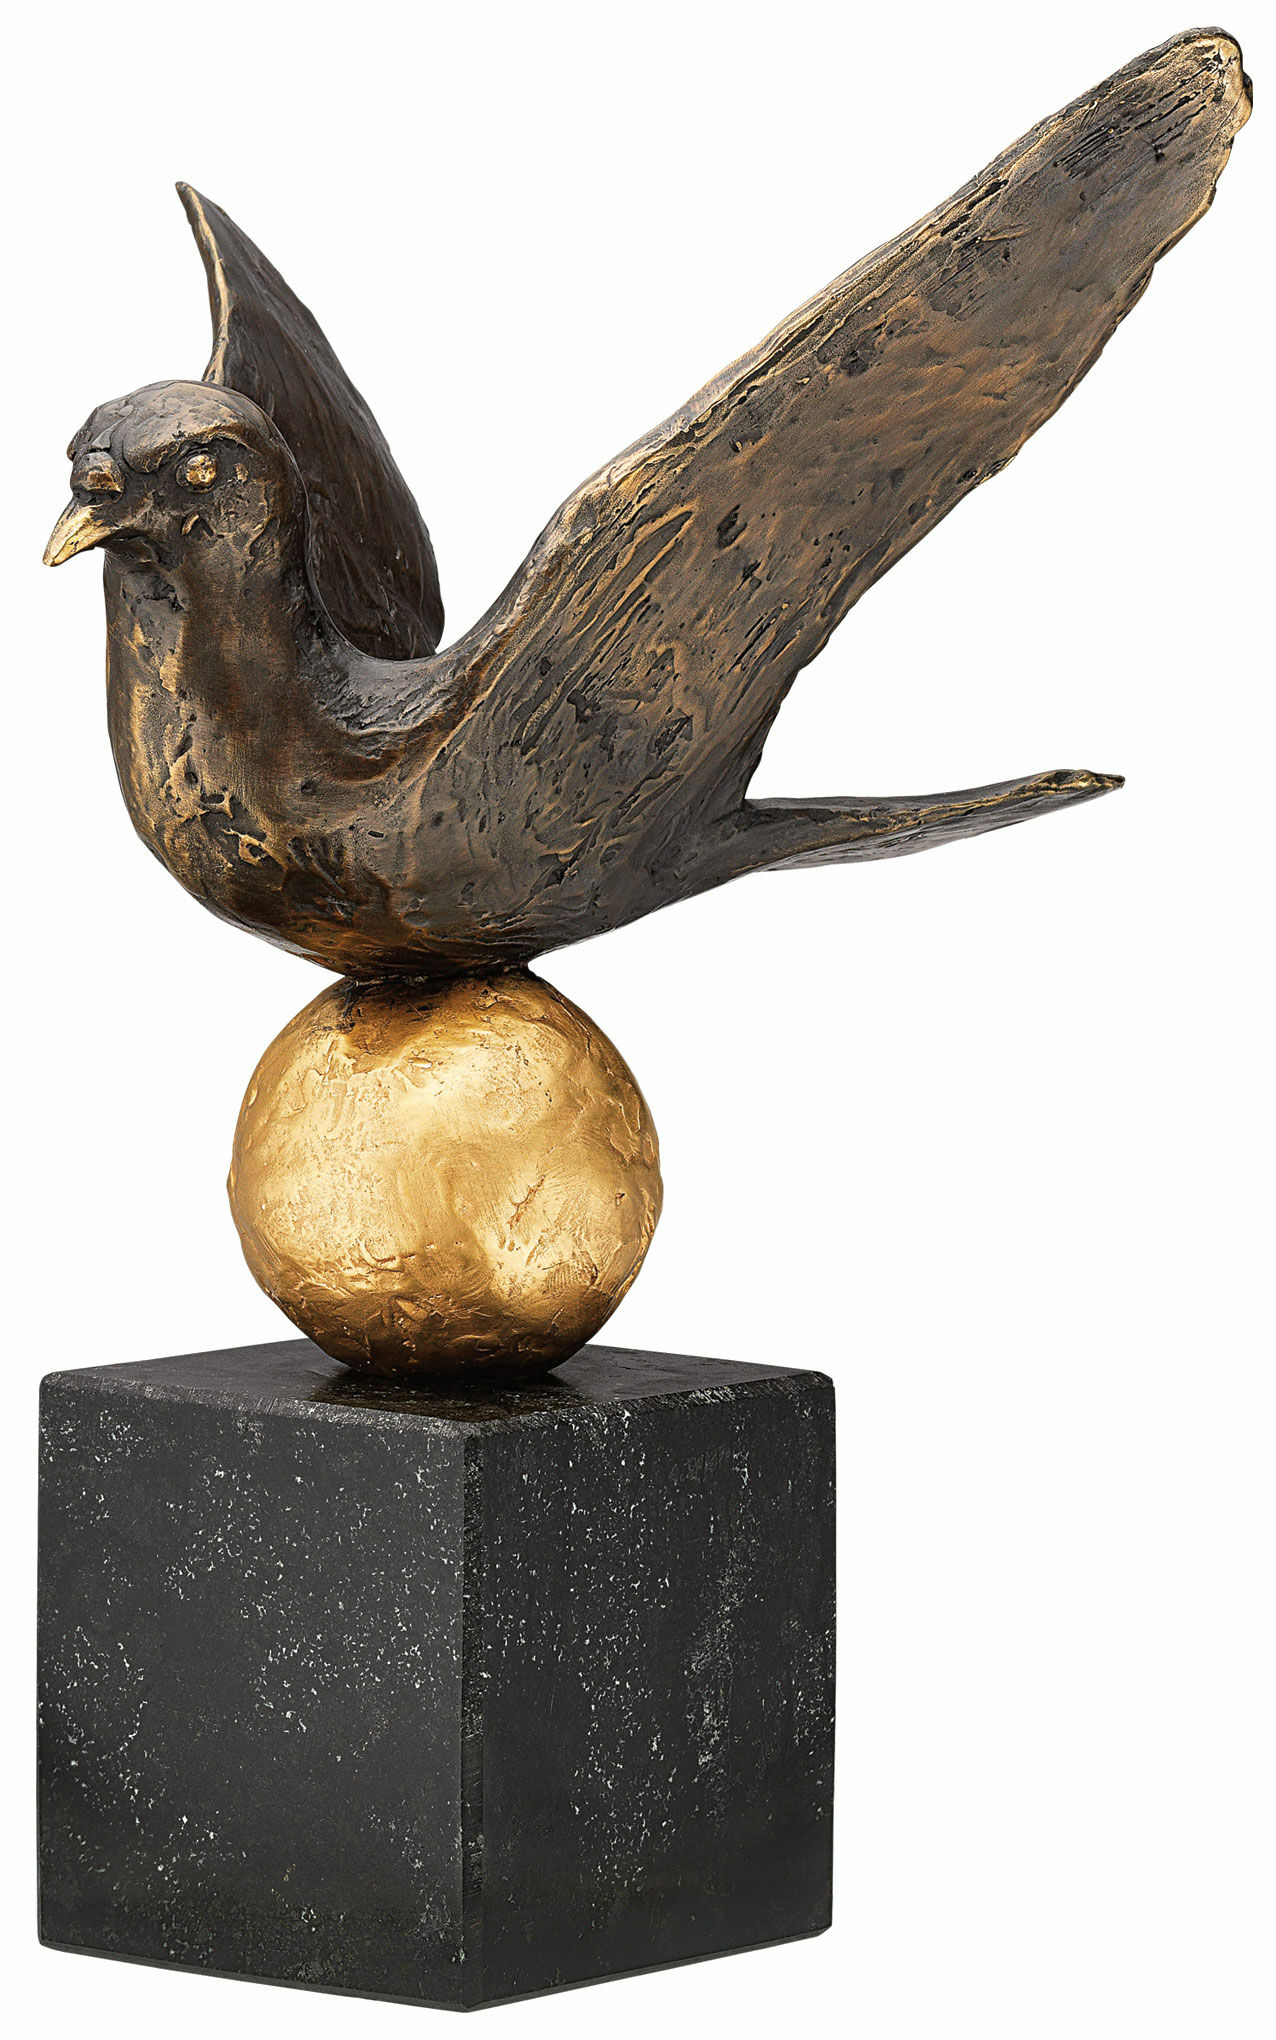 Skulptur "Dove of Peace", bronze von Kurt Arentz